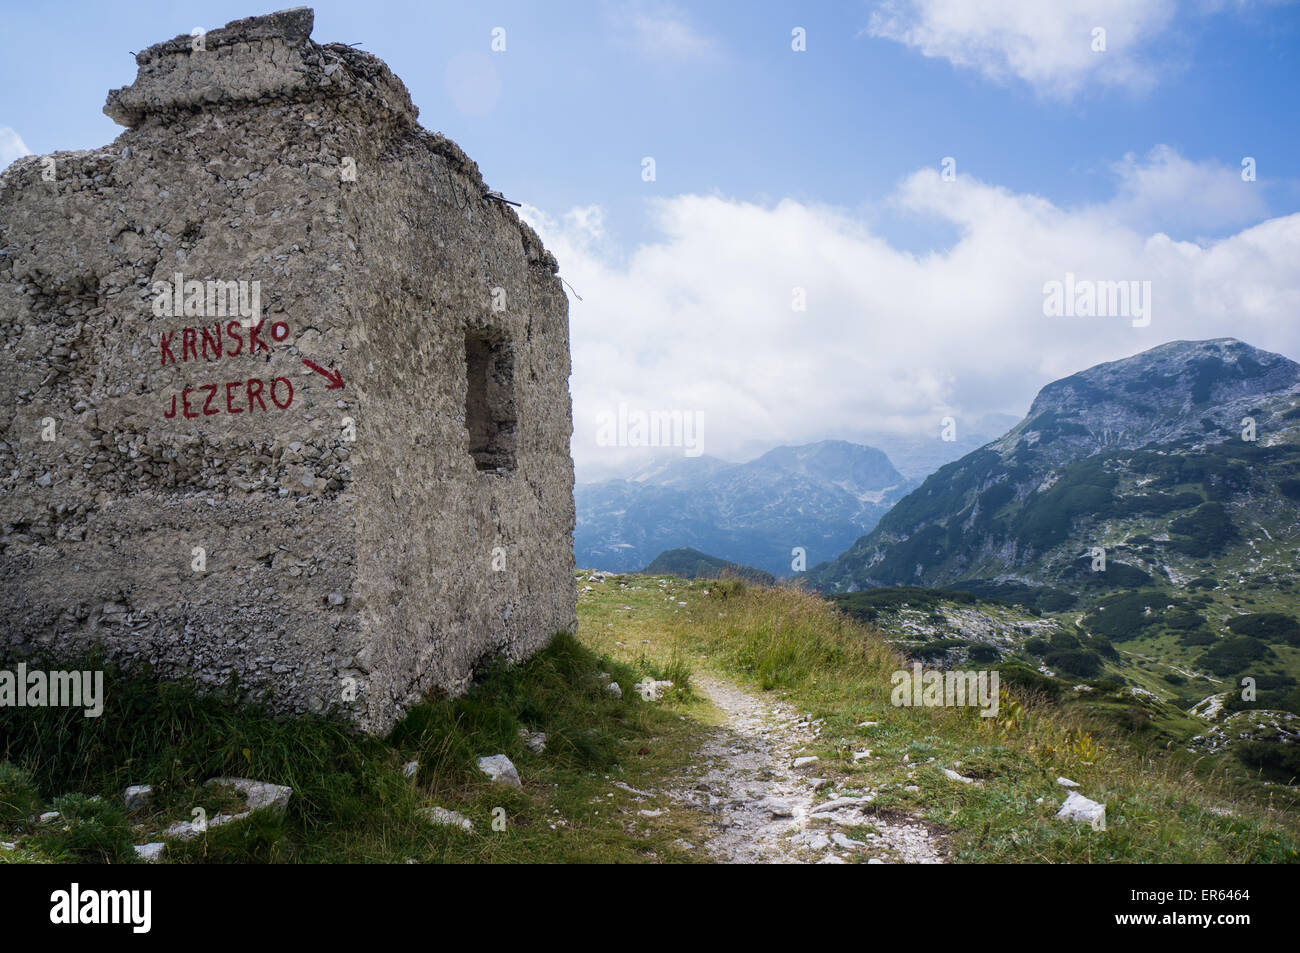 Julian Alps in Slovenia. Sign for Krn lake on the Bogatinska vratca. Stock Photo